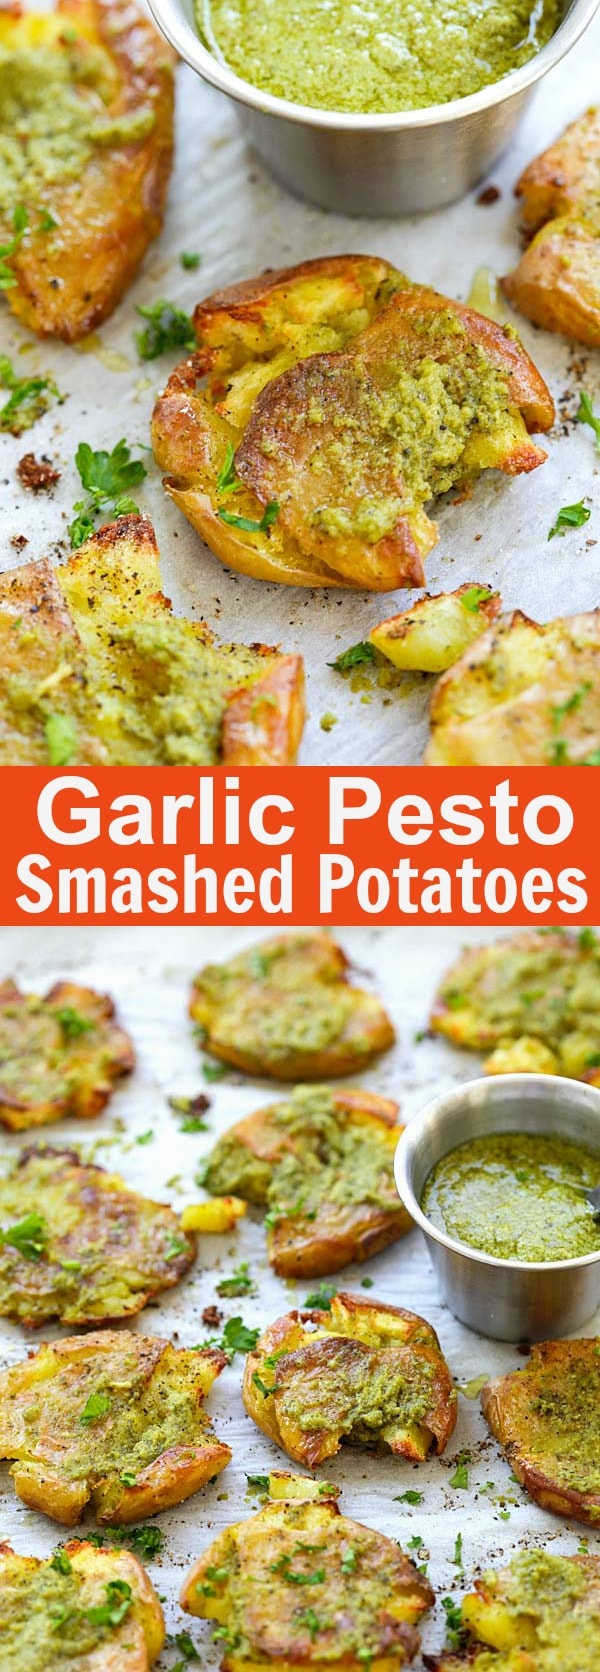 Garlic Pesto Smashed Potatoes – the best potatoes recipe ever with smashed baby potatoes topped with delicious garlic pesto. So good | rasamalaysia.com